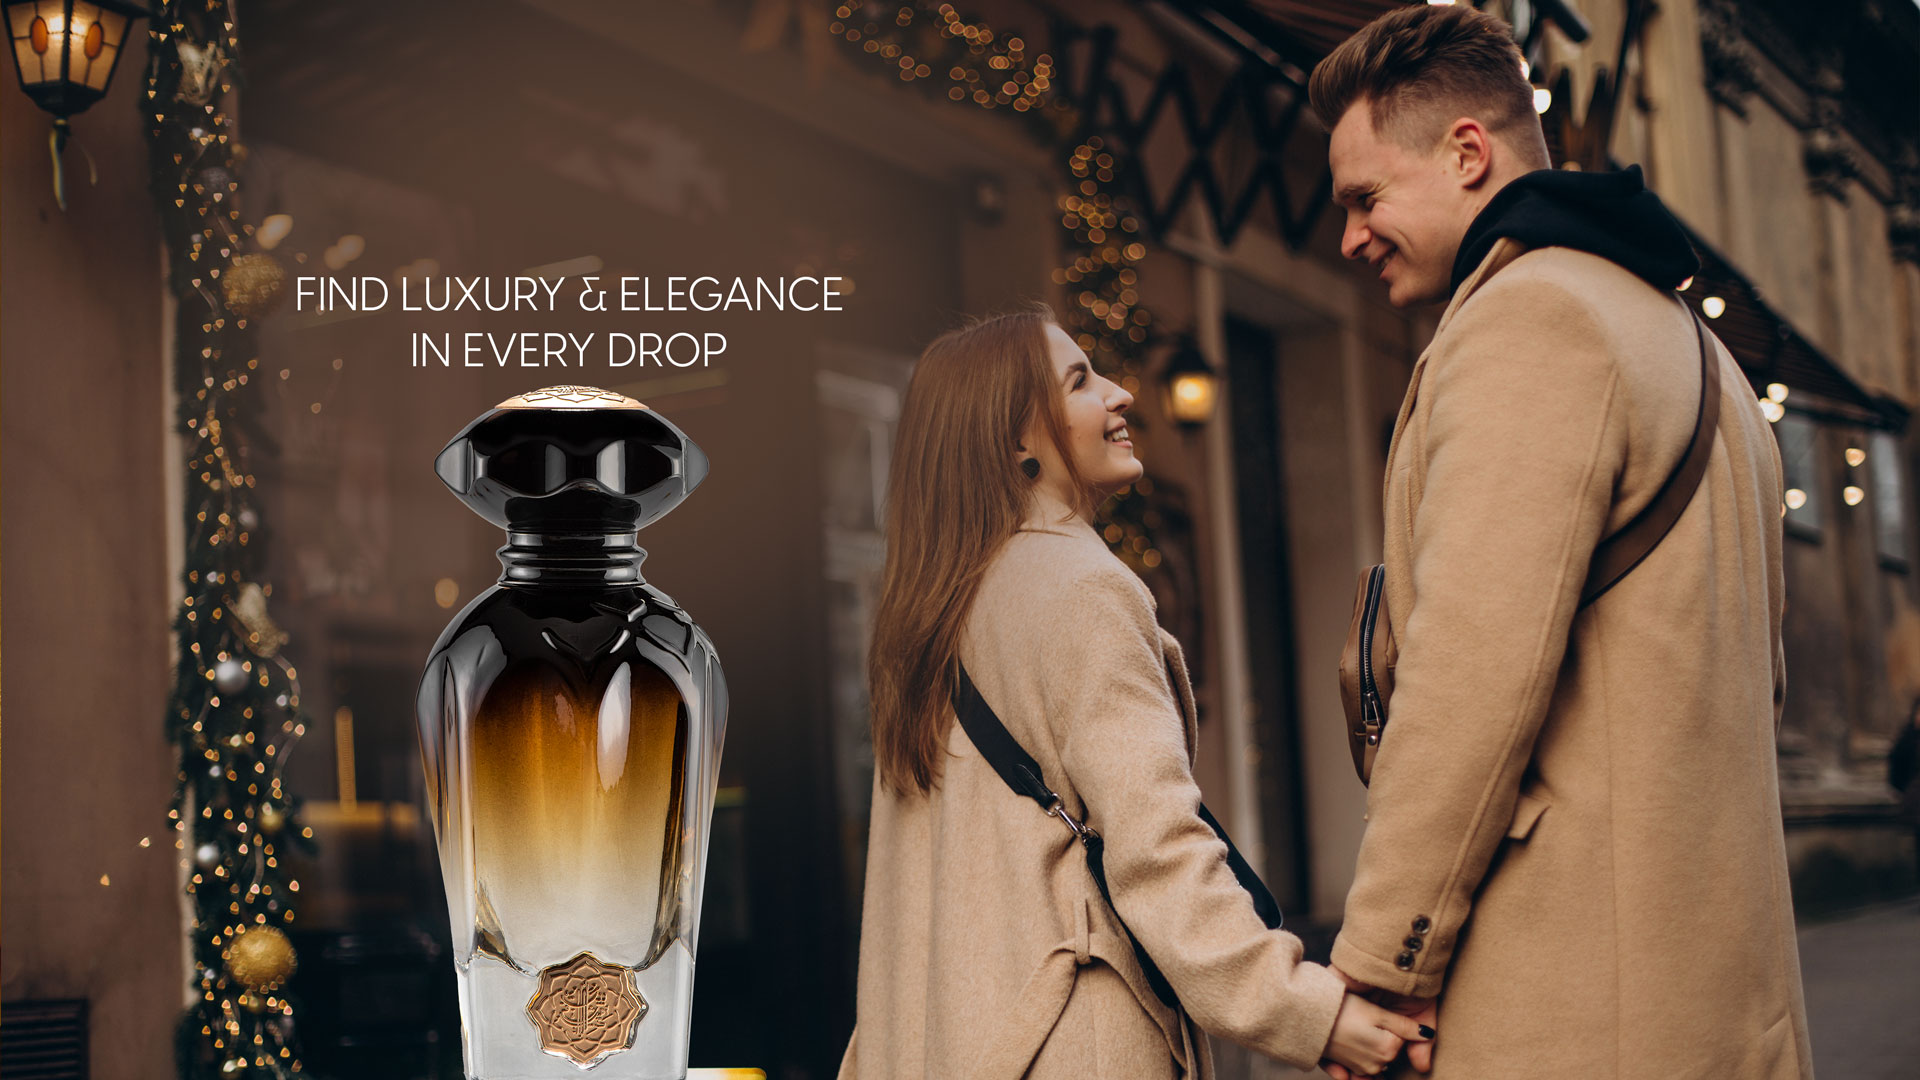 Find Luxury & Elegance in Every Drop: Buy Our Maison Francis Kurkdjian Inspired Perfume